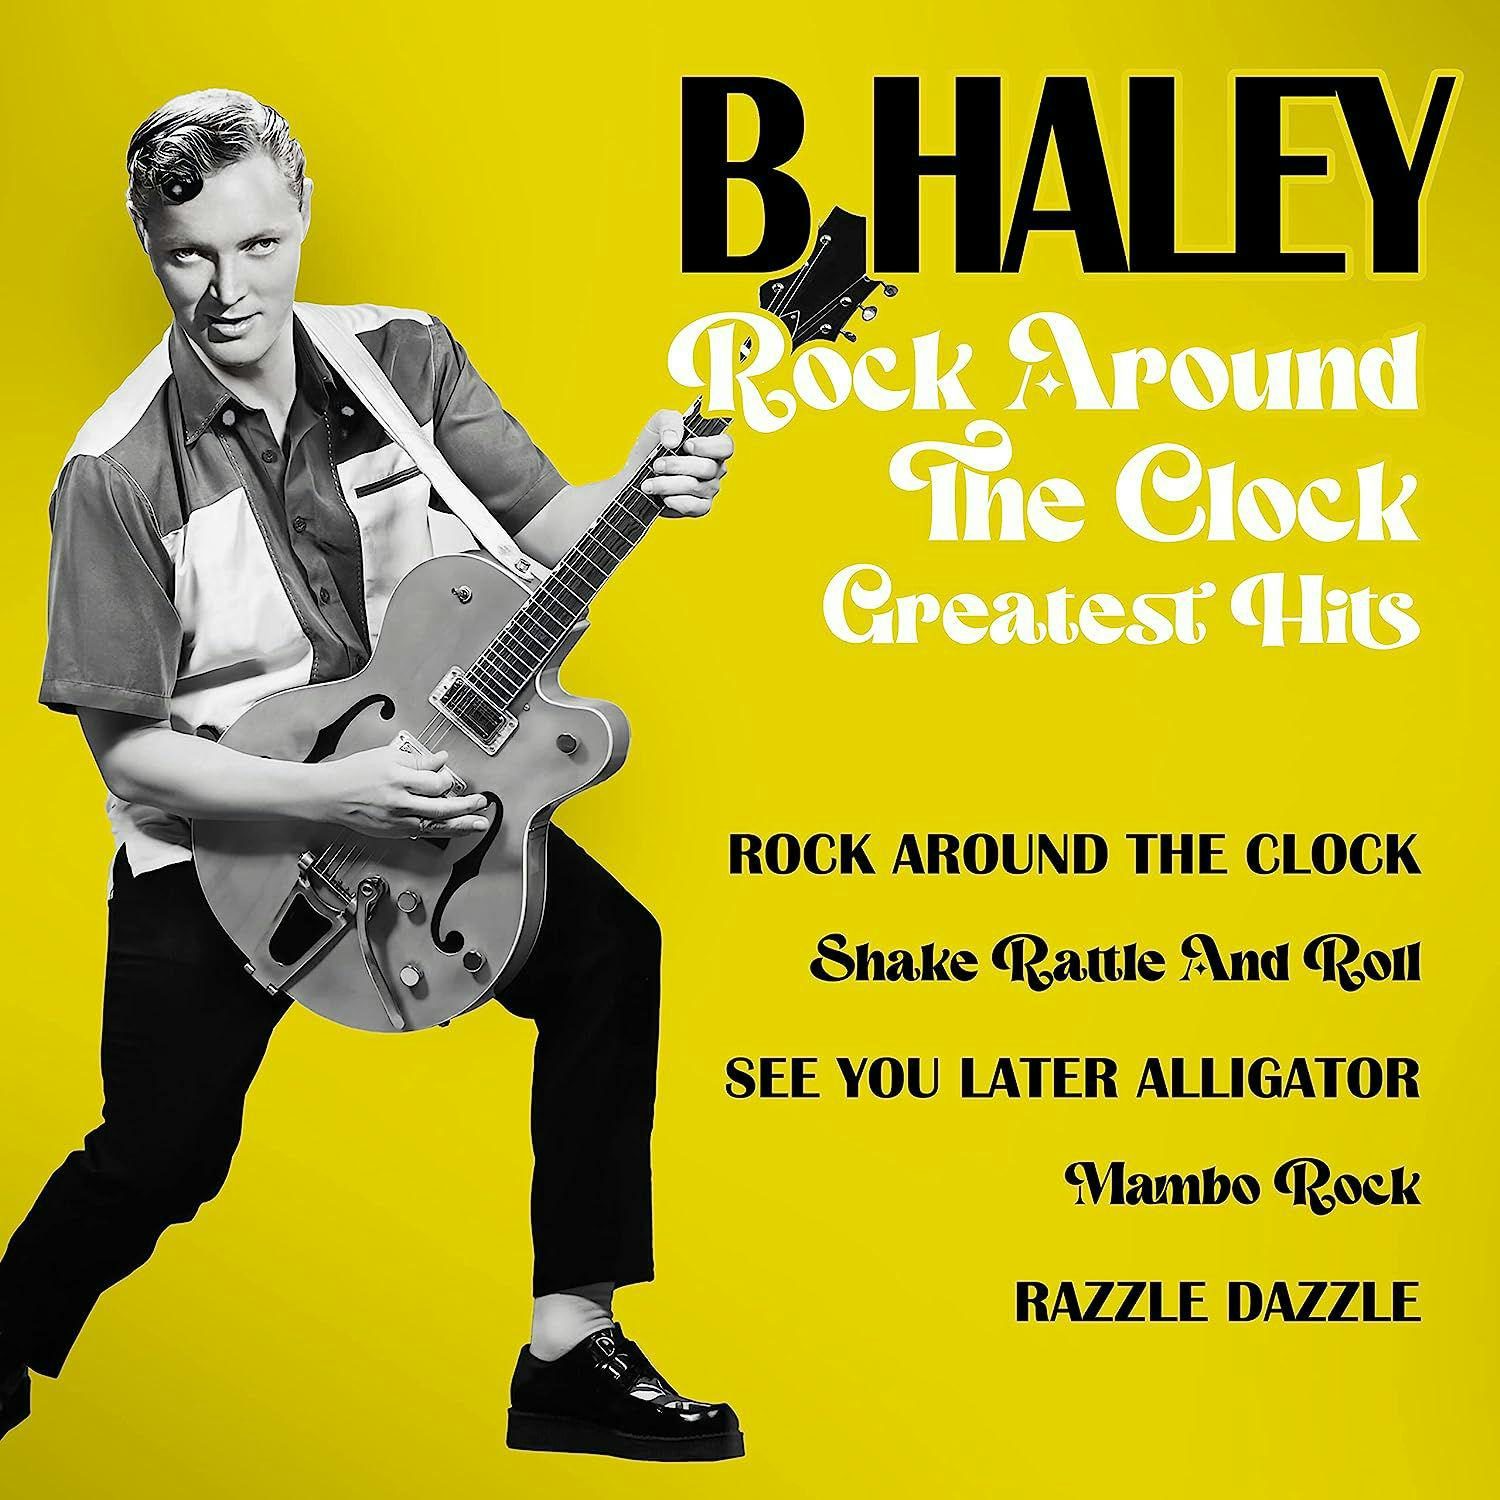 Bill Haley Rock Around The Clock - Greatest Hits Vinyl Record